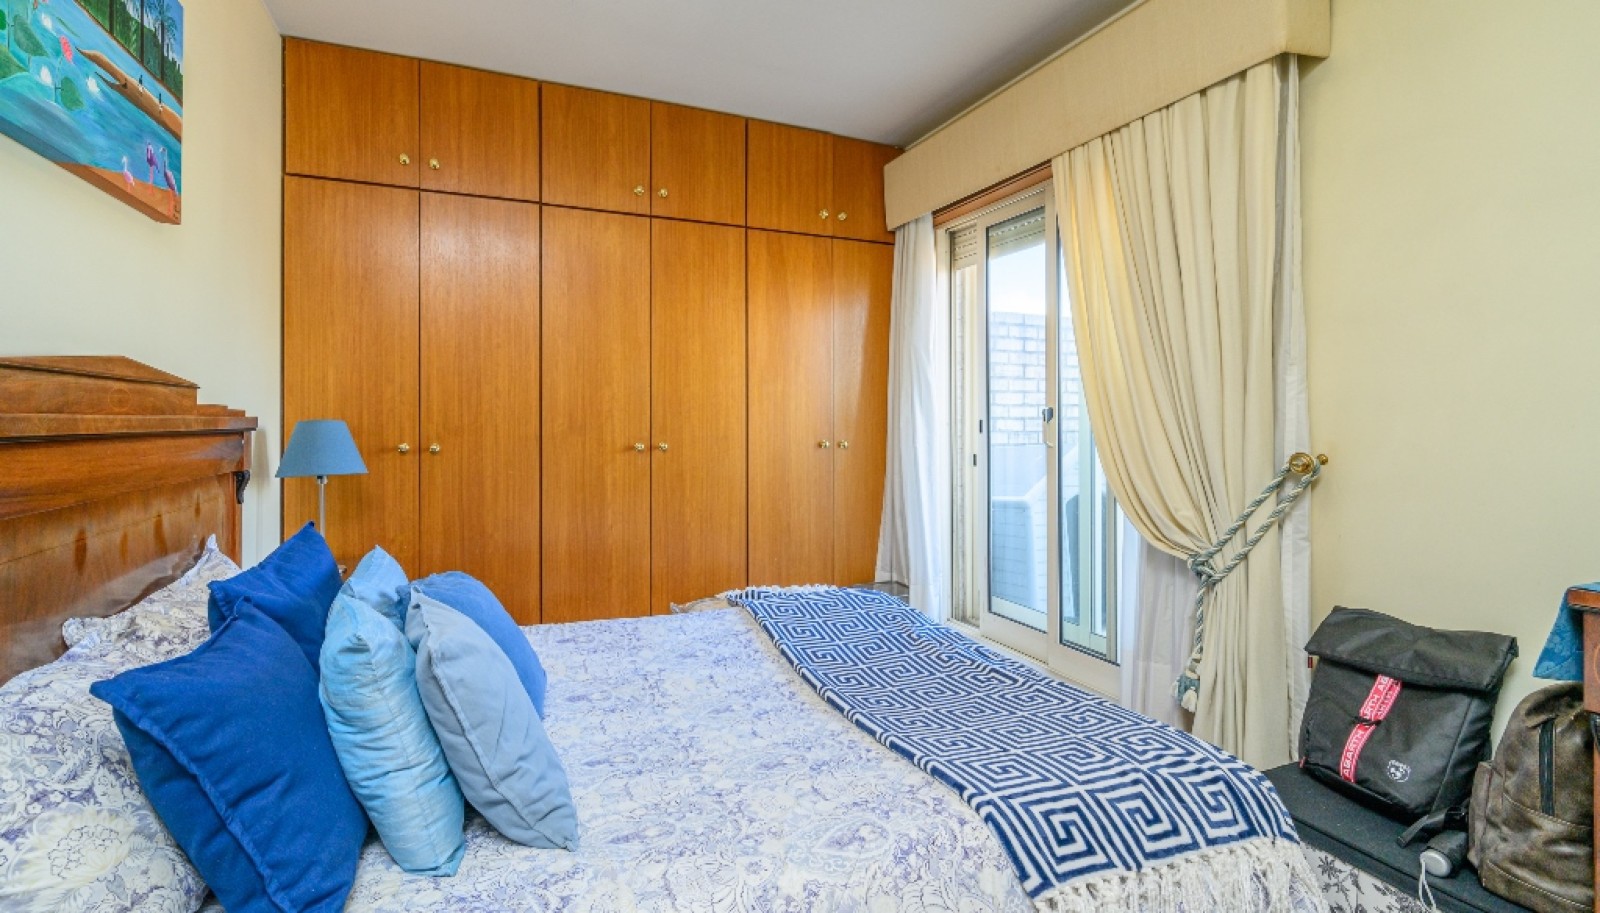 Piso dúplex de 4 dormitorios con vistas al mar, en venta, Leça da Palmeira, Portugal_266044